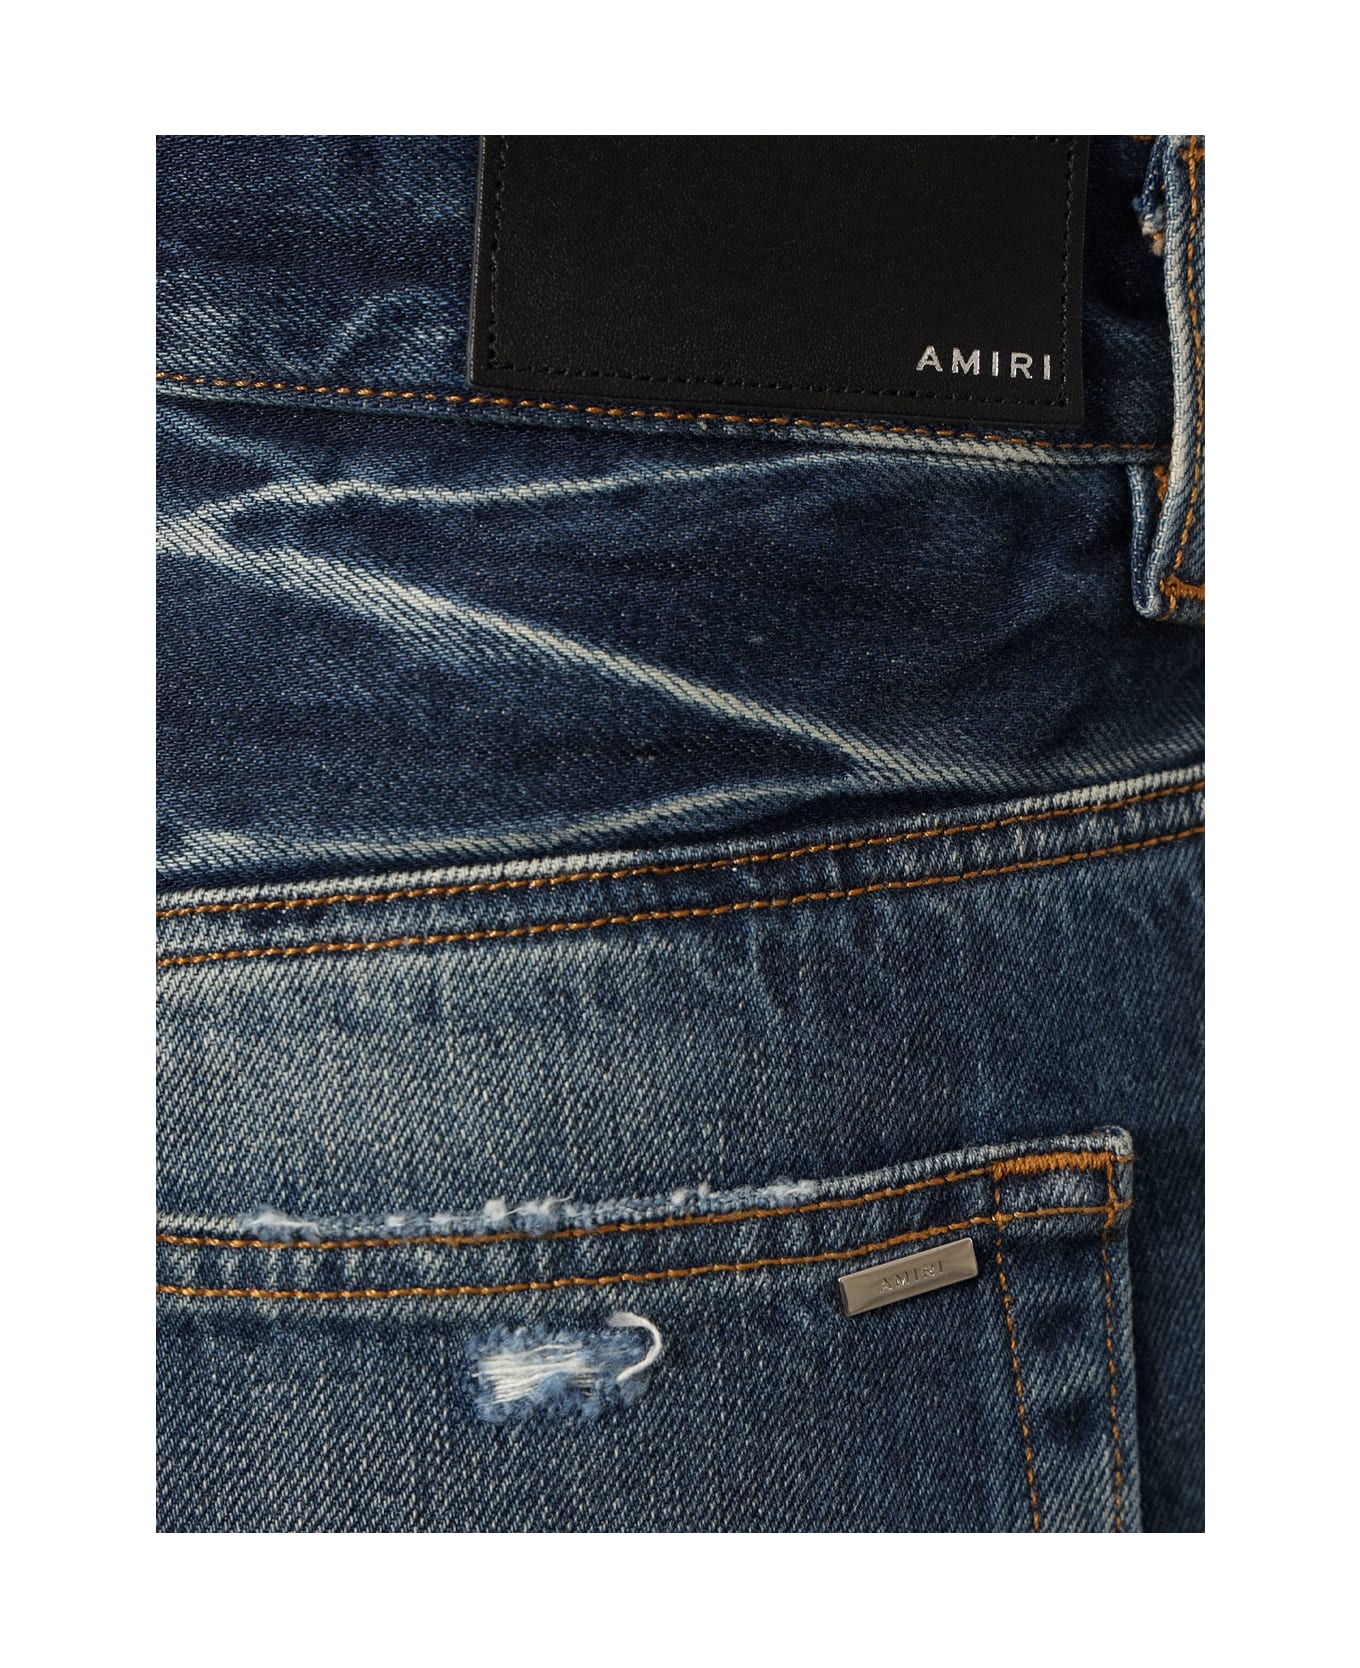 AMIRI Jeans - BLUE デニム